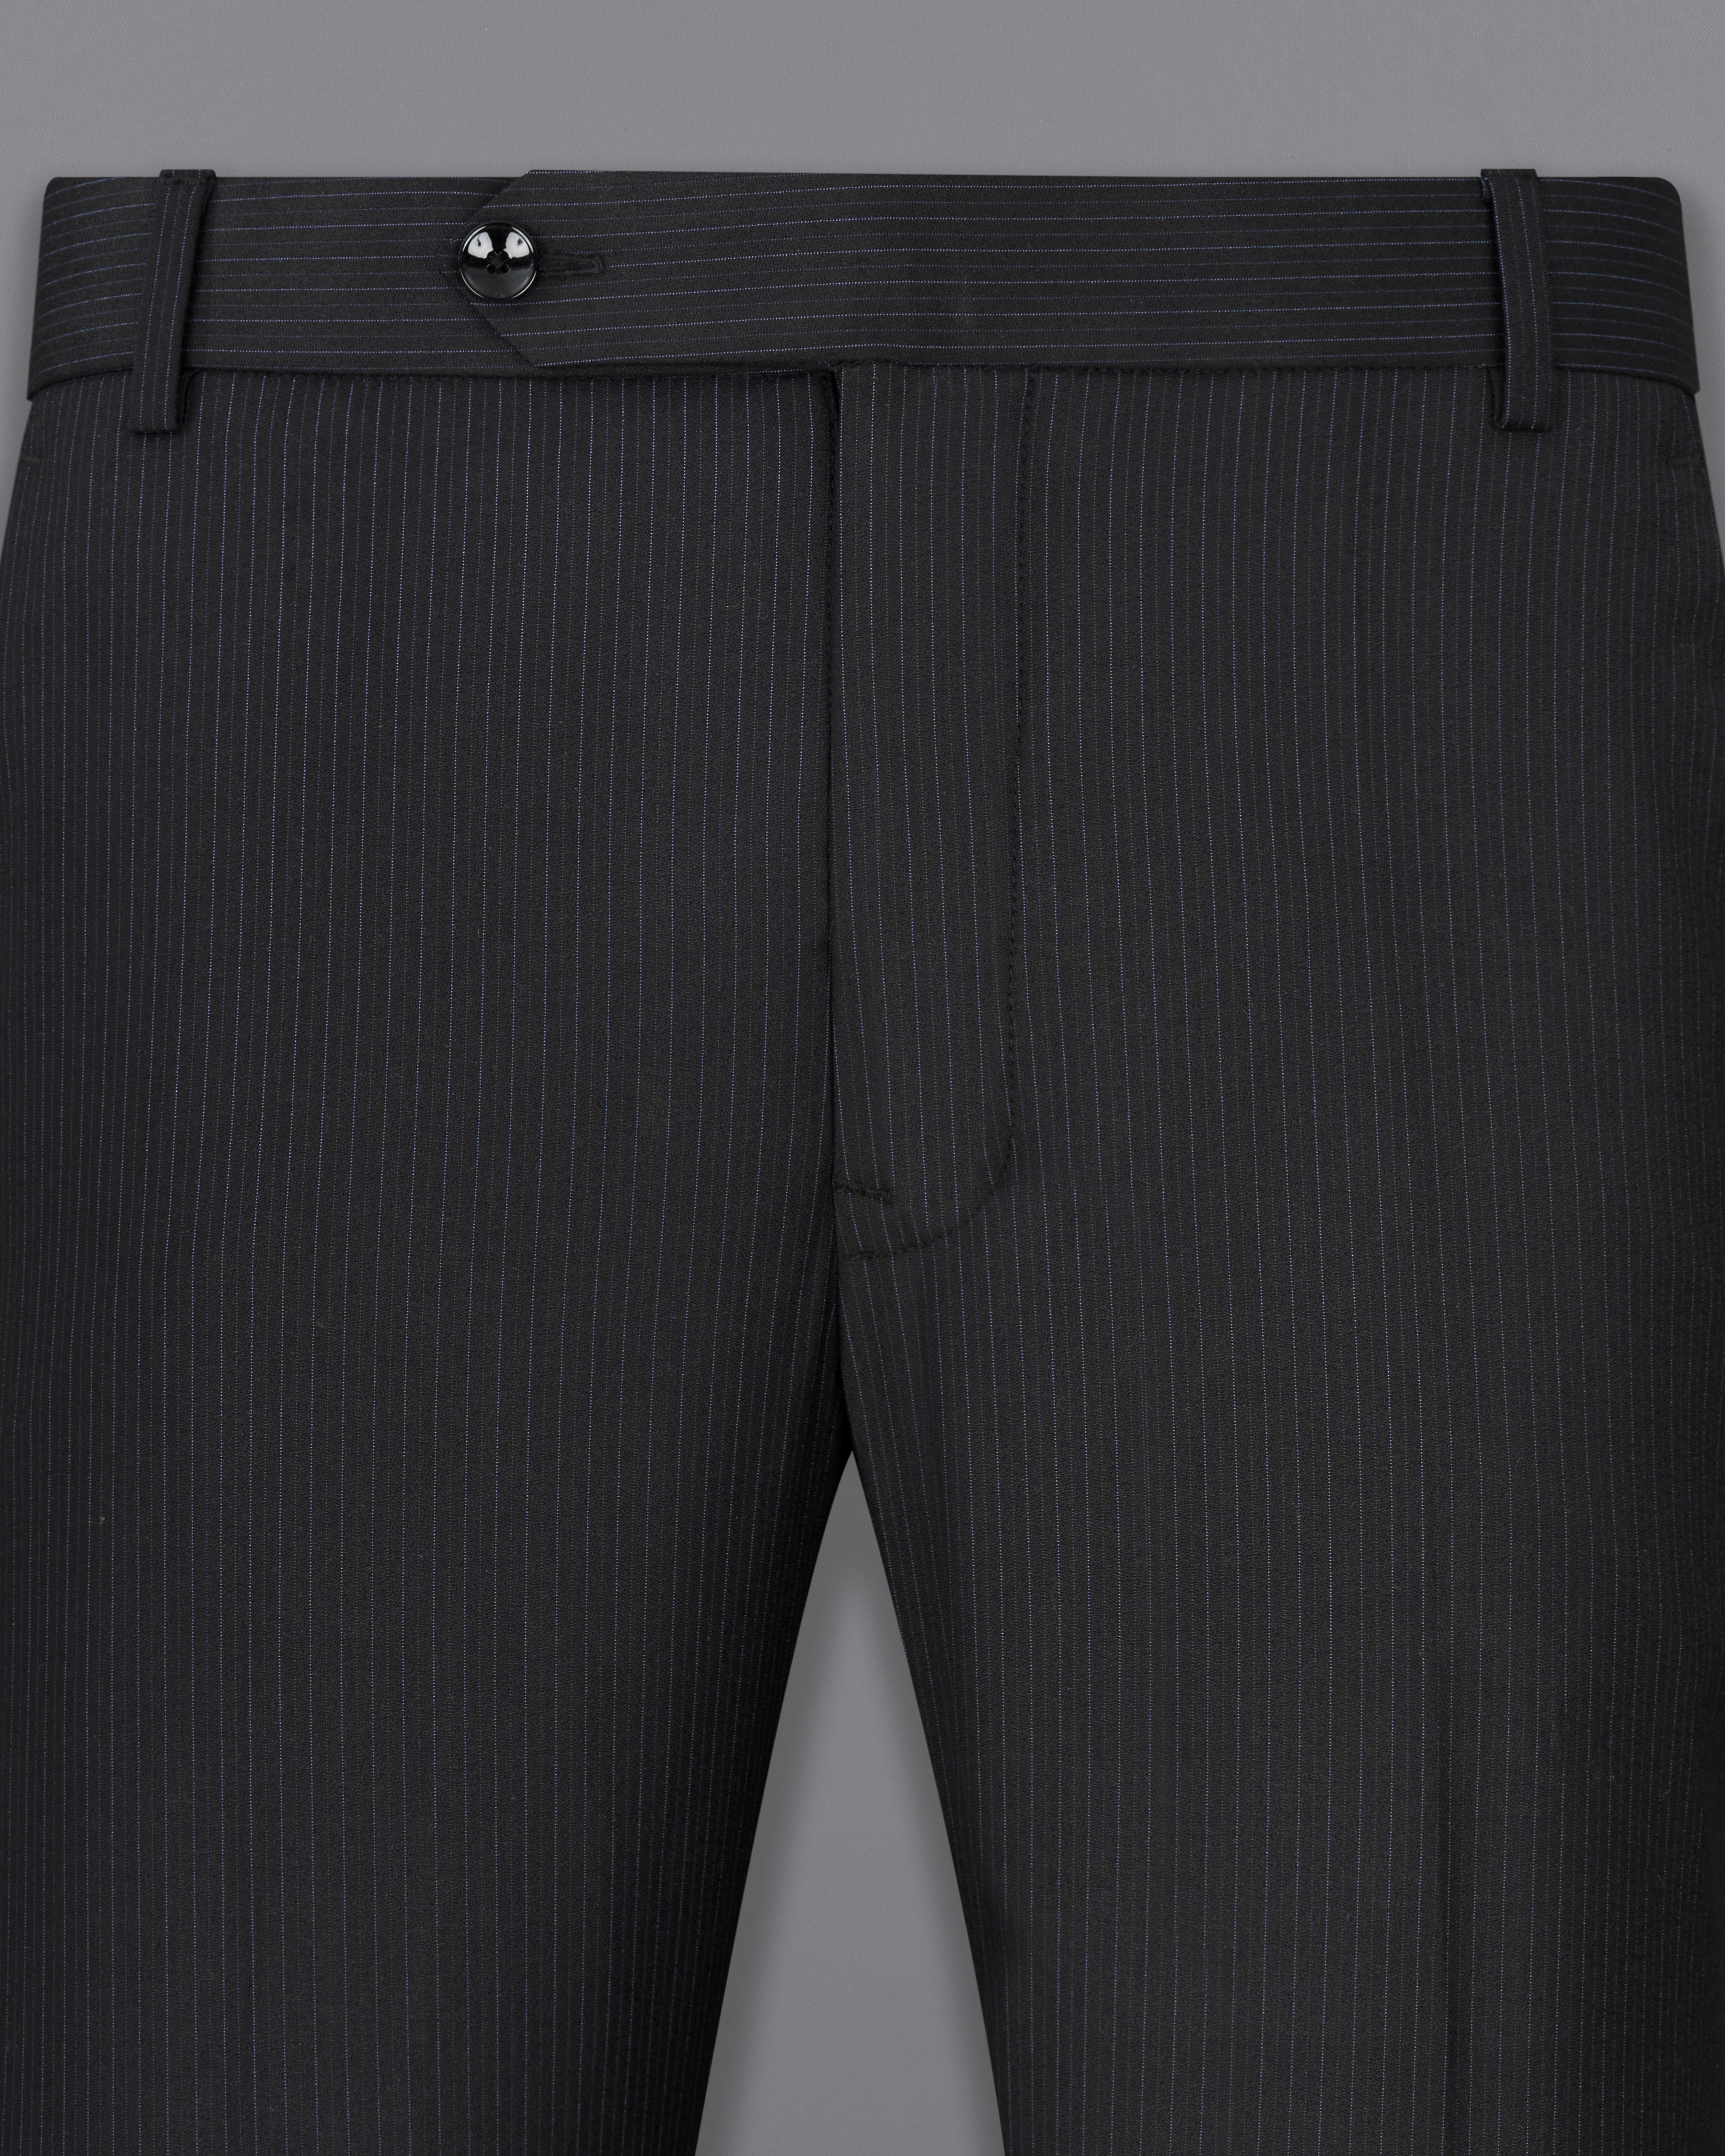 Mirage Black Striped Pant